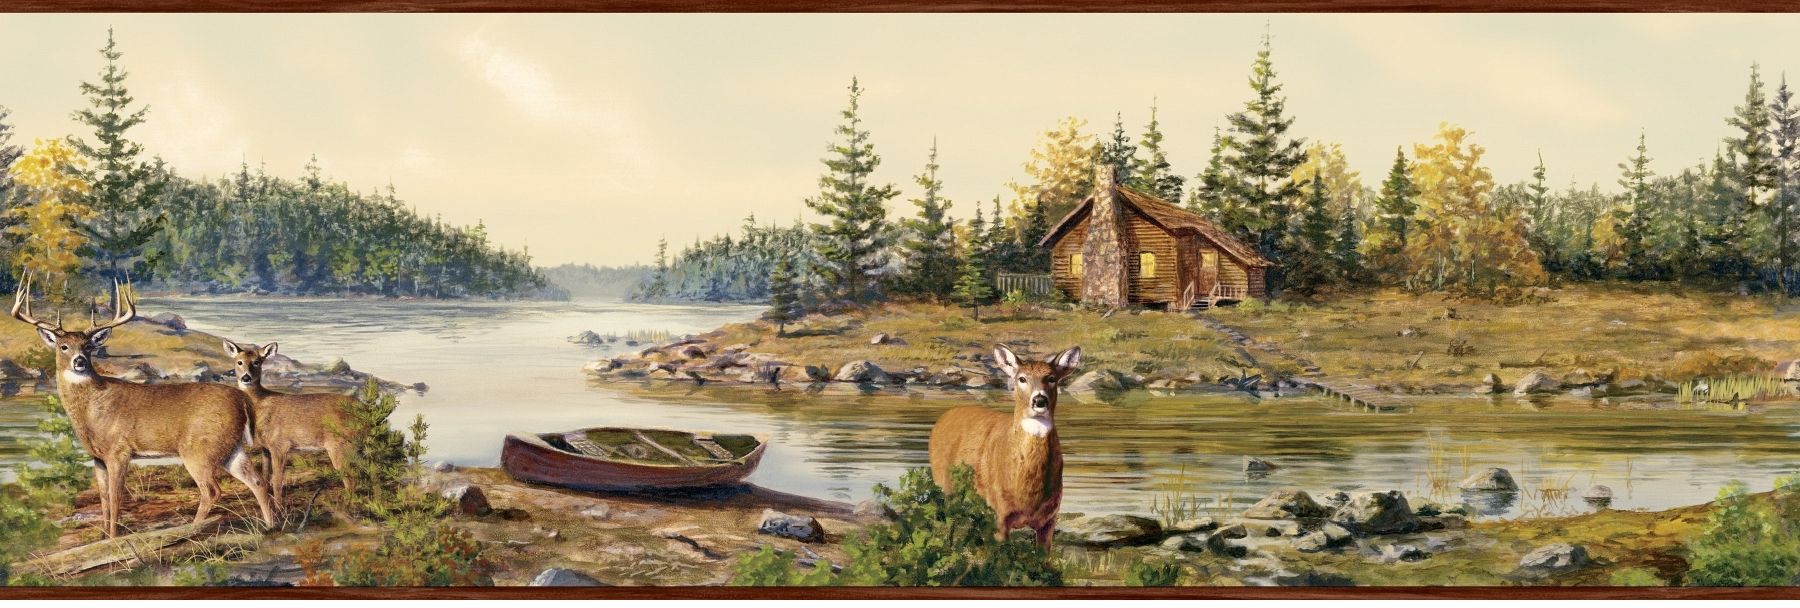 Cabin Creek Deer Wallpaper Border 1800x608